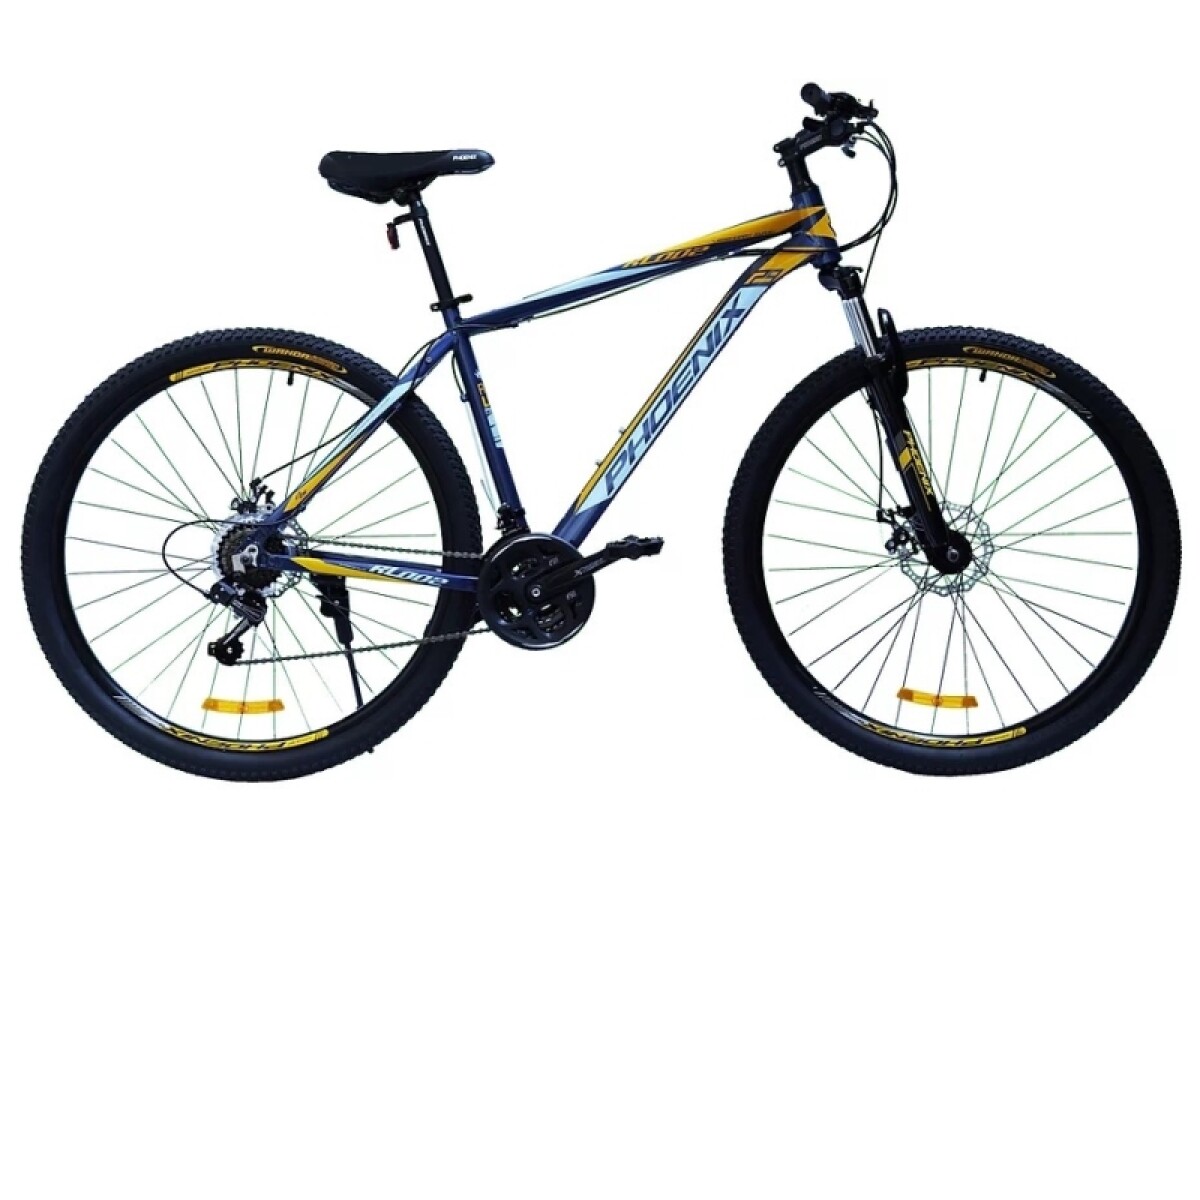 Bicicleta Phoenix Mtb Rl002 R.29 (con Bloqueo) (f/mecanico) - Azul/amarillo. 